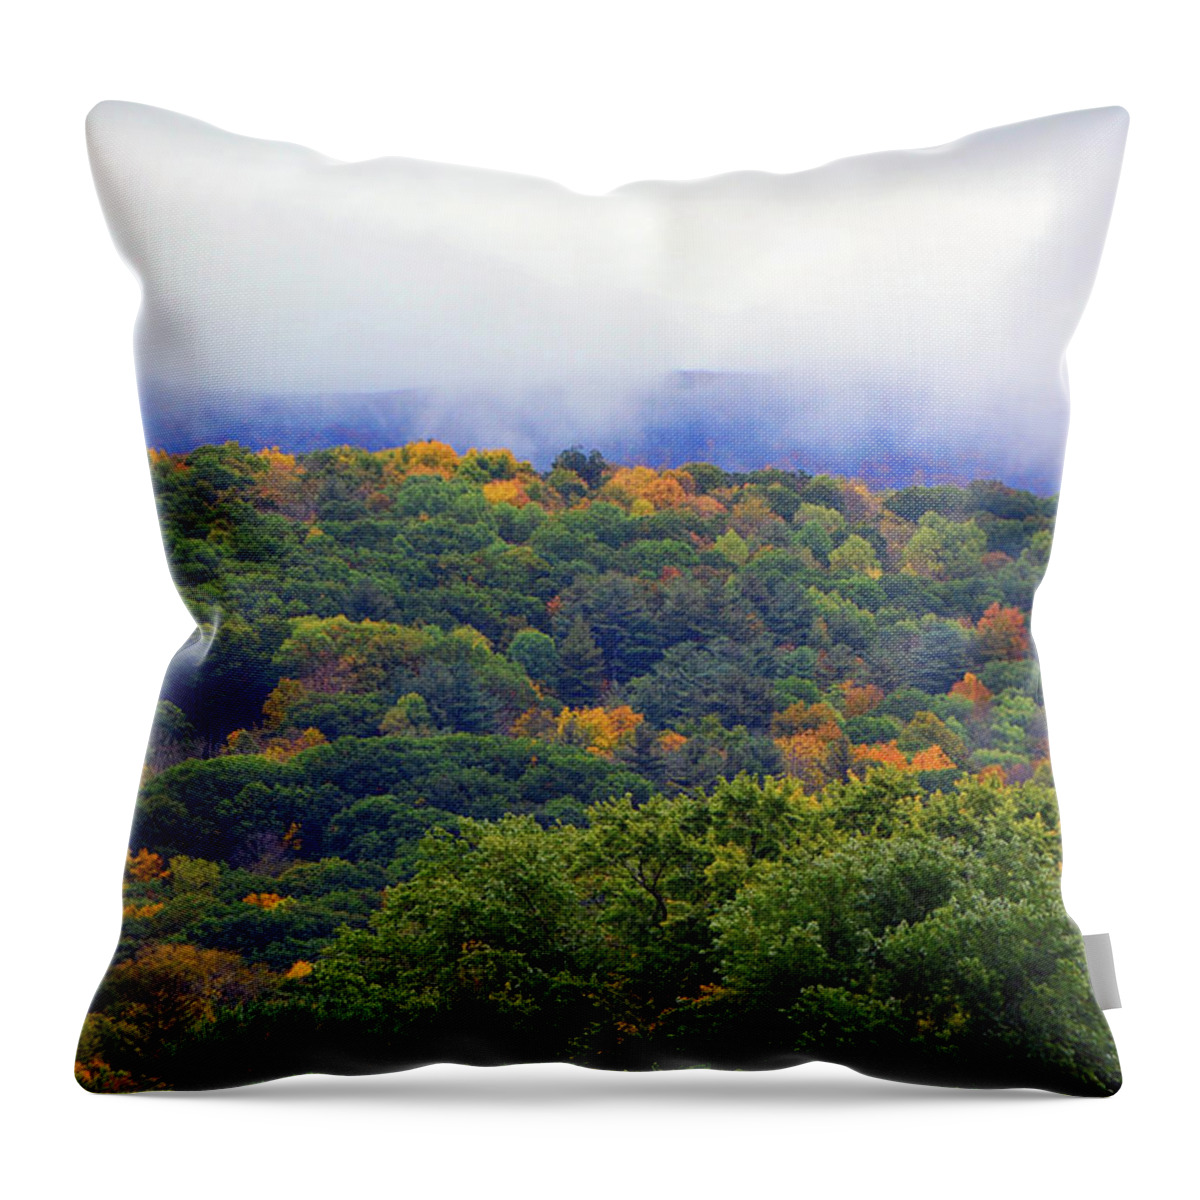 Mount Greylock In The Clouds Throw Pillow featuring the photograph Mount Greylock in the Clouds by Raymond Salani III